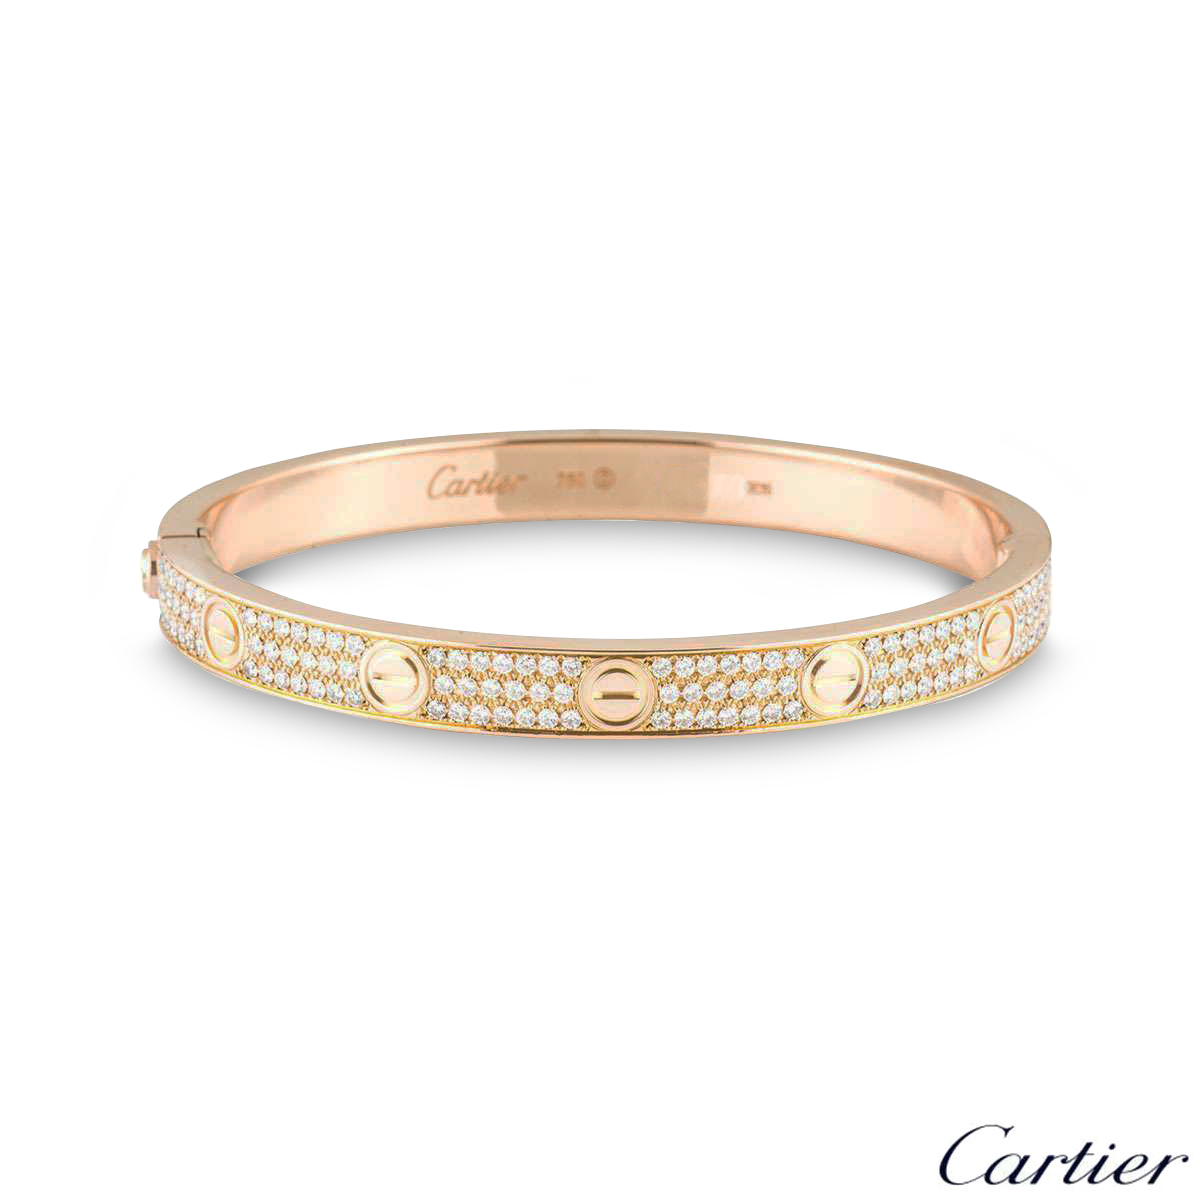 Cartier Rose Gold Full Pave Diamond Love Bracelet Size 18 N6036918 | Rich Diamonds